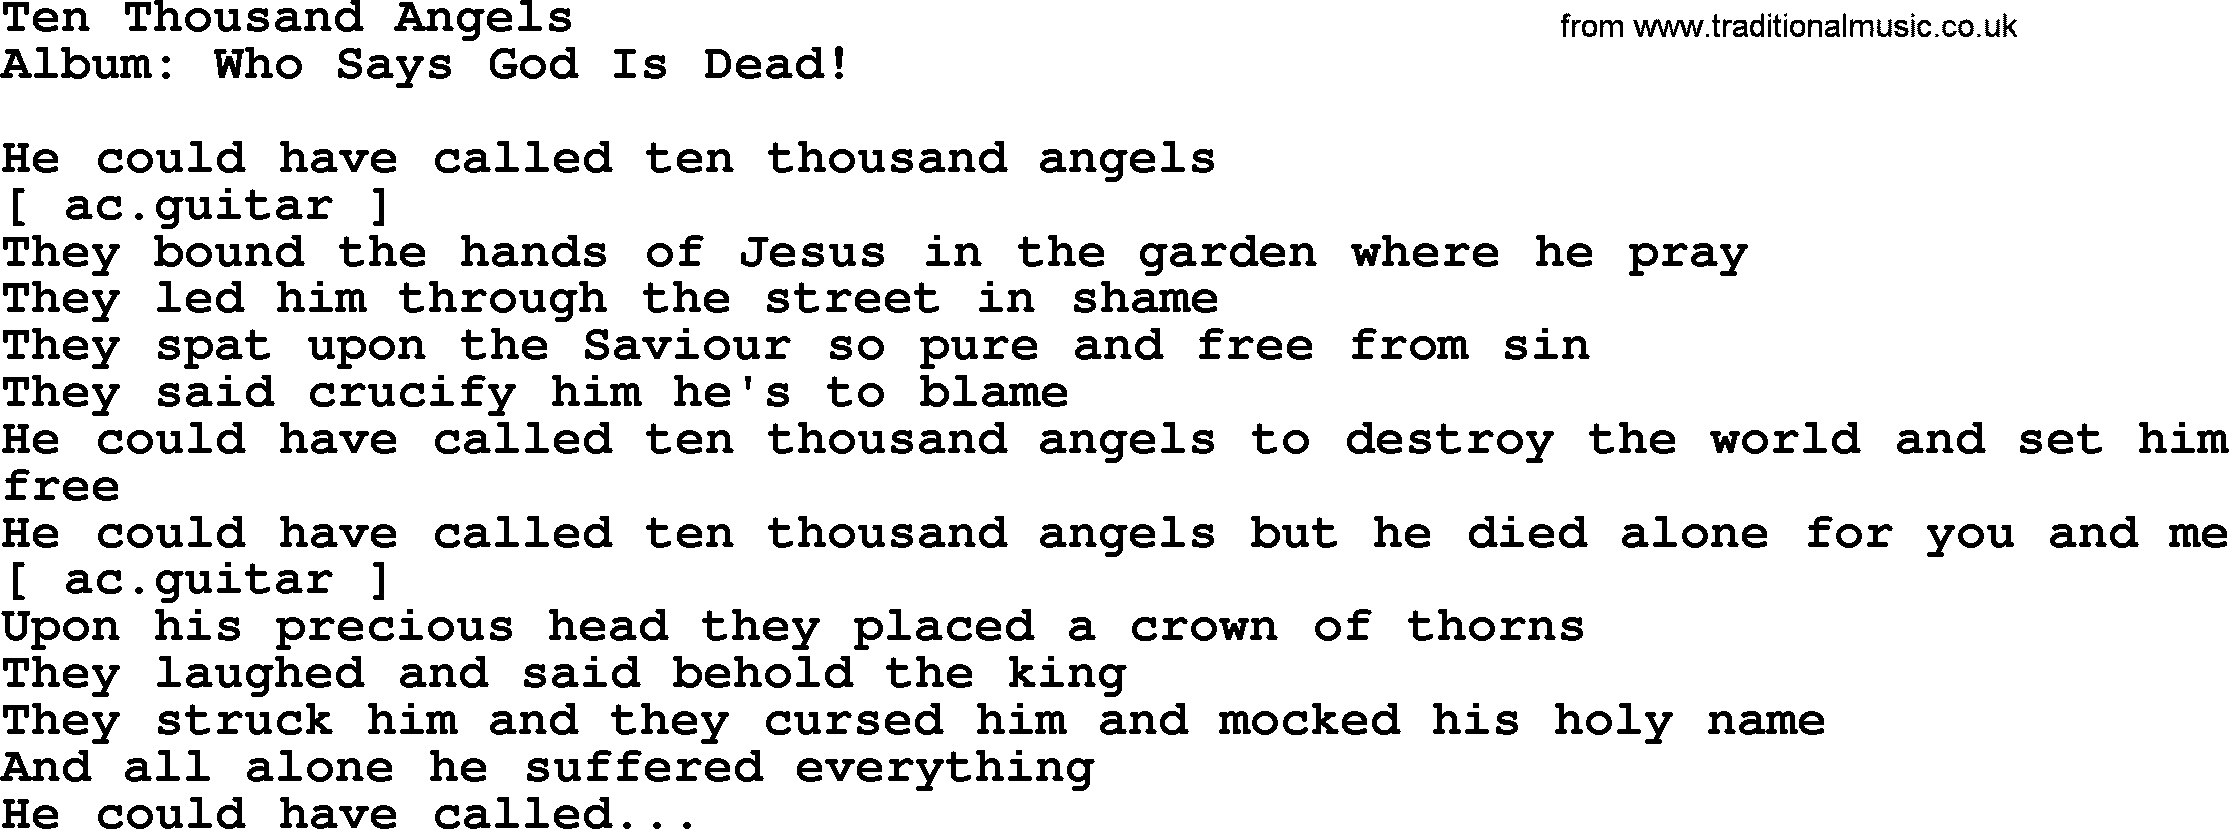 Loretta Lynn song: Ten Thousand Angels lyrics